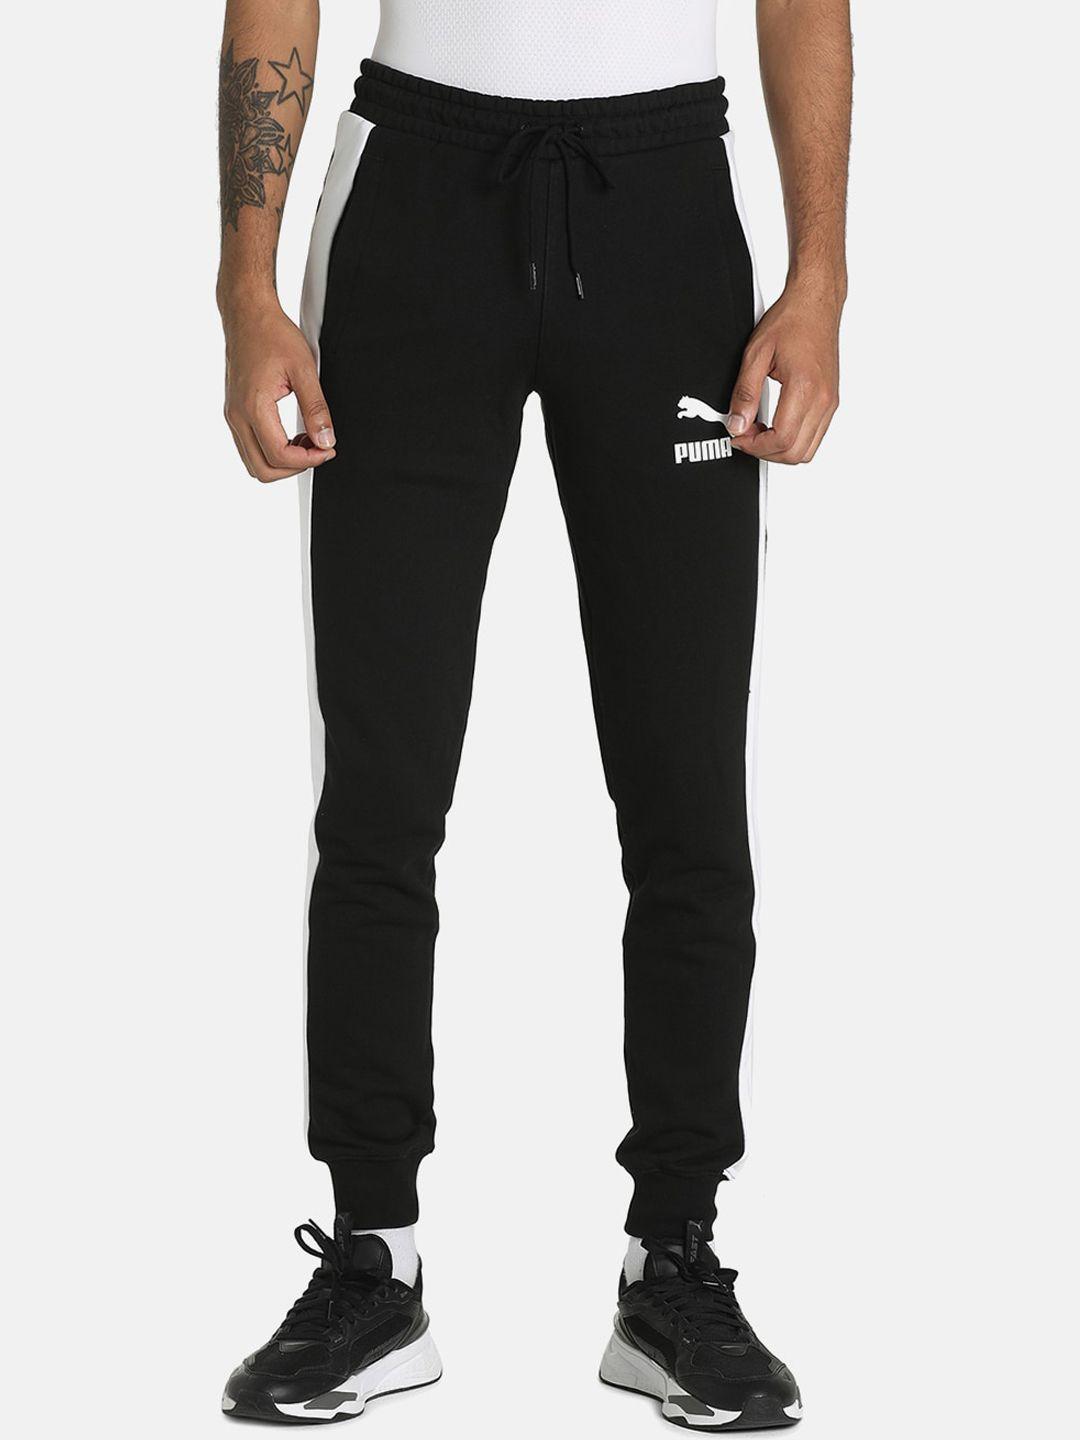 puma-men-black-brand-logo-printed-regular-joggers